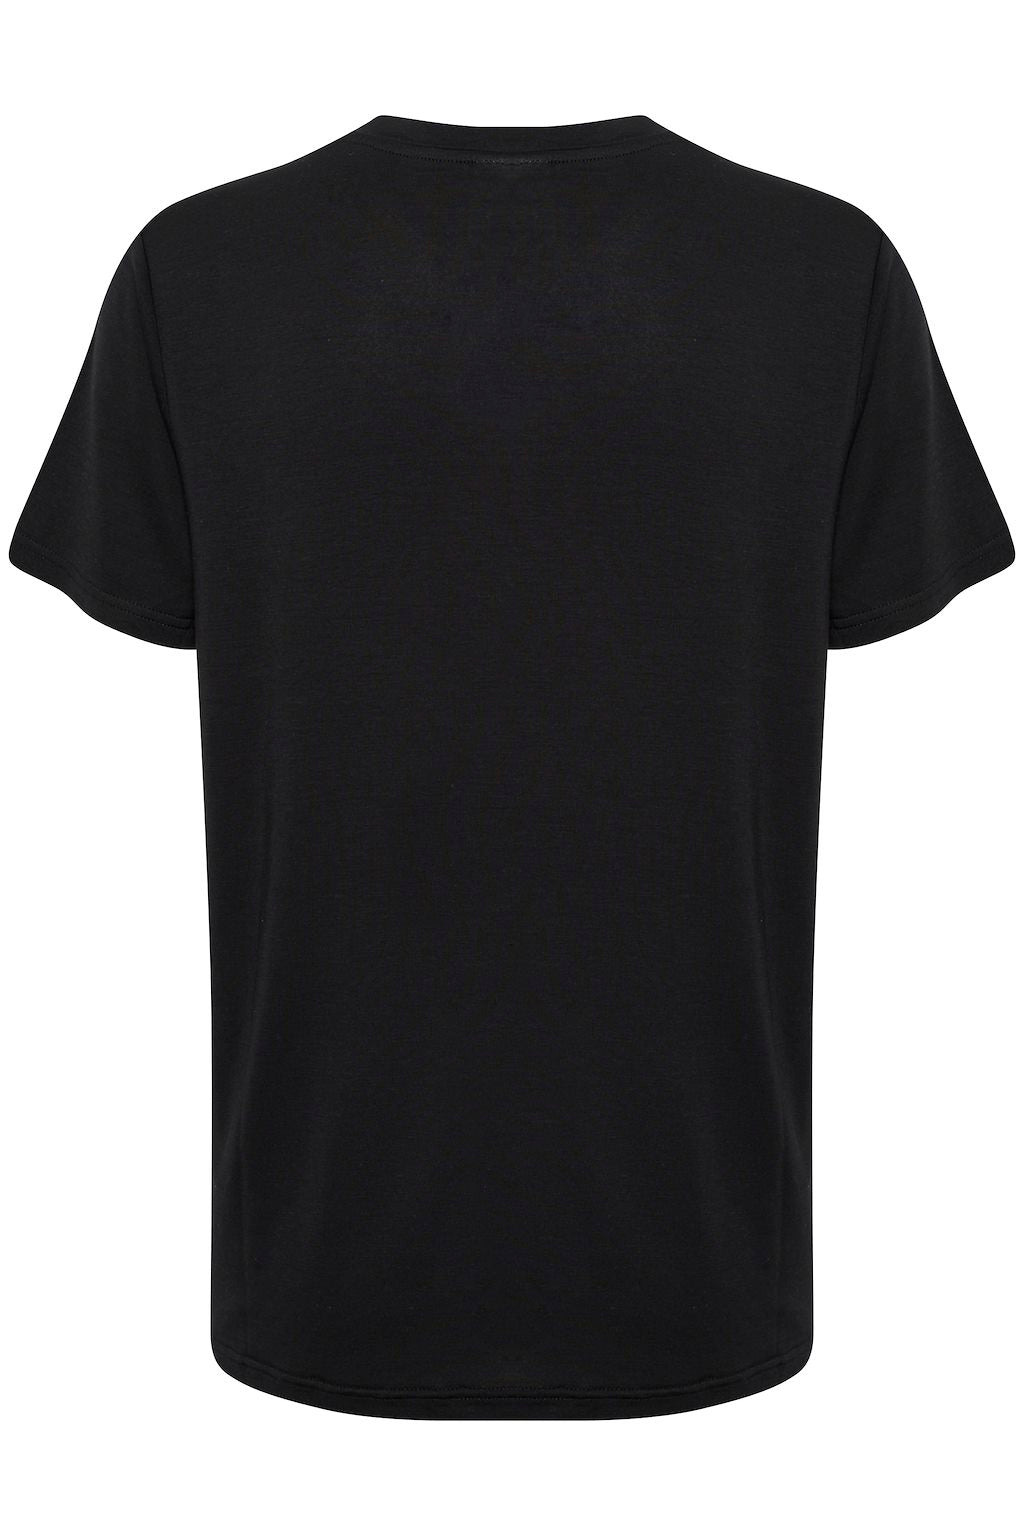 Saint Tropez- Adelia Regular Tshirt Black